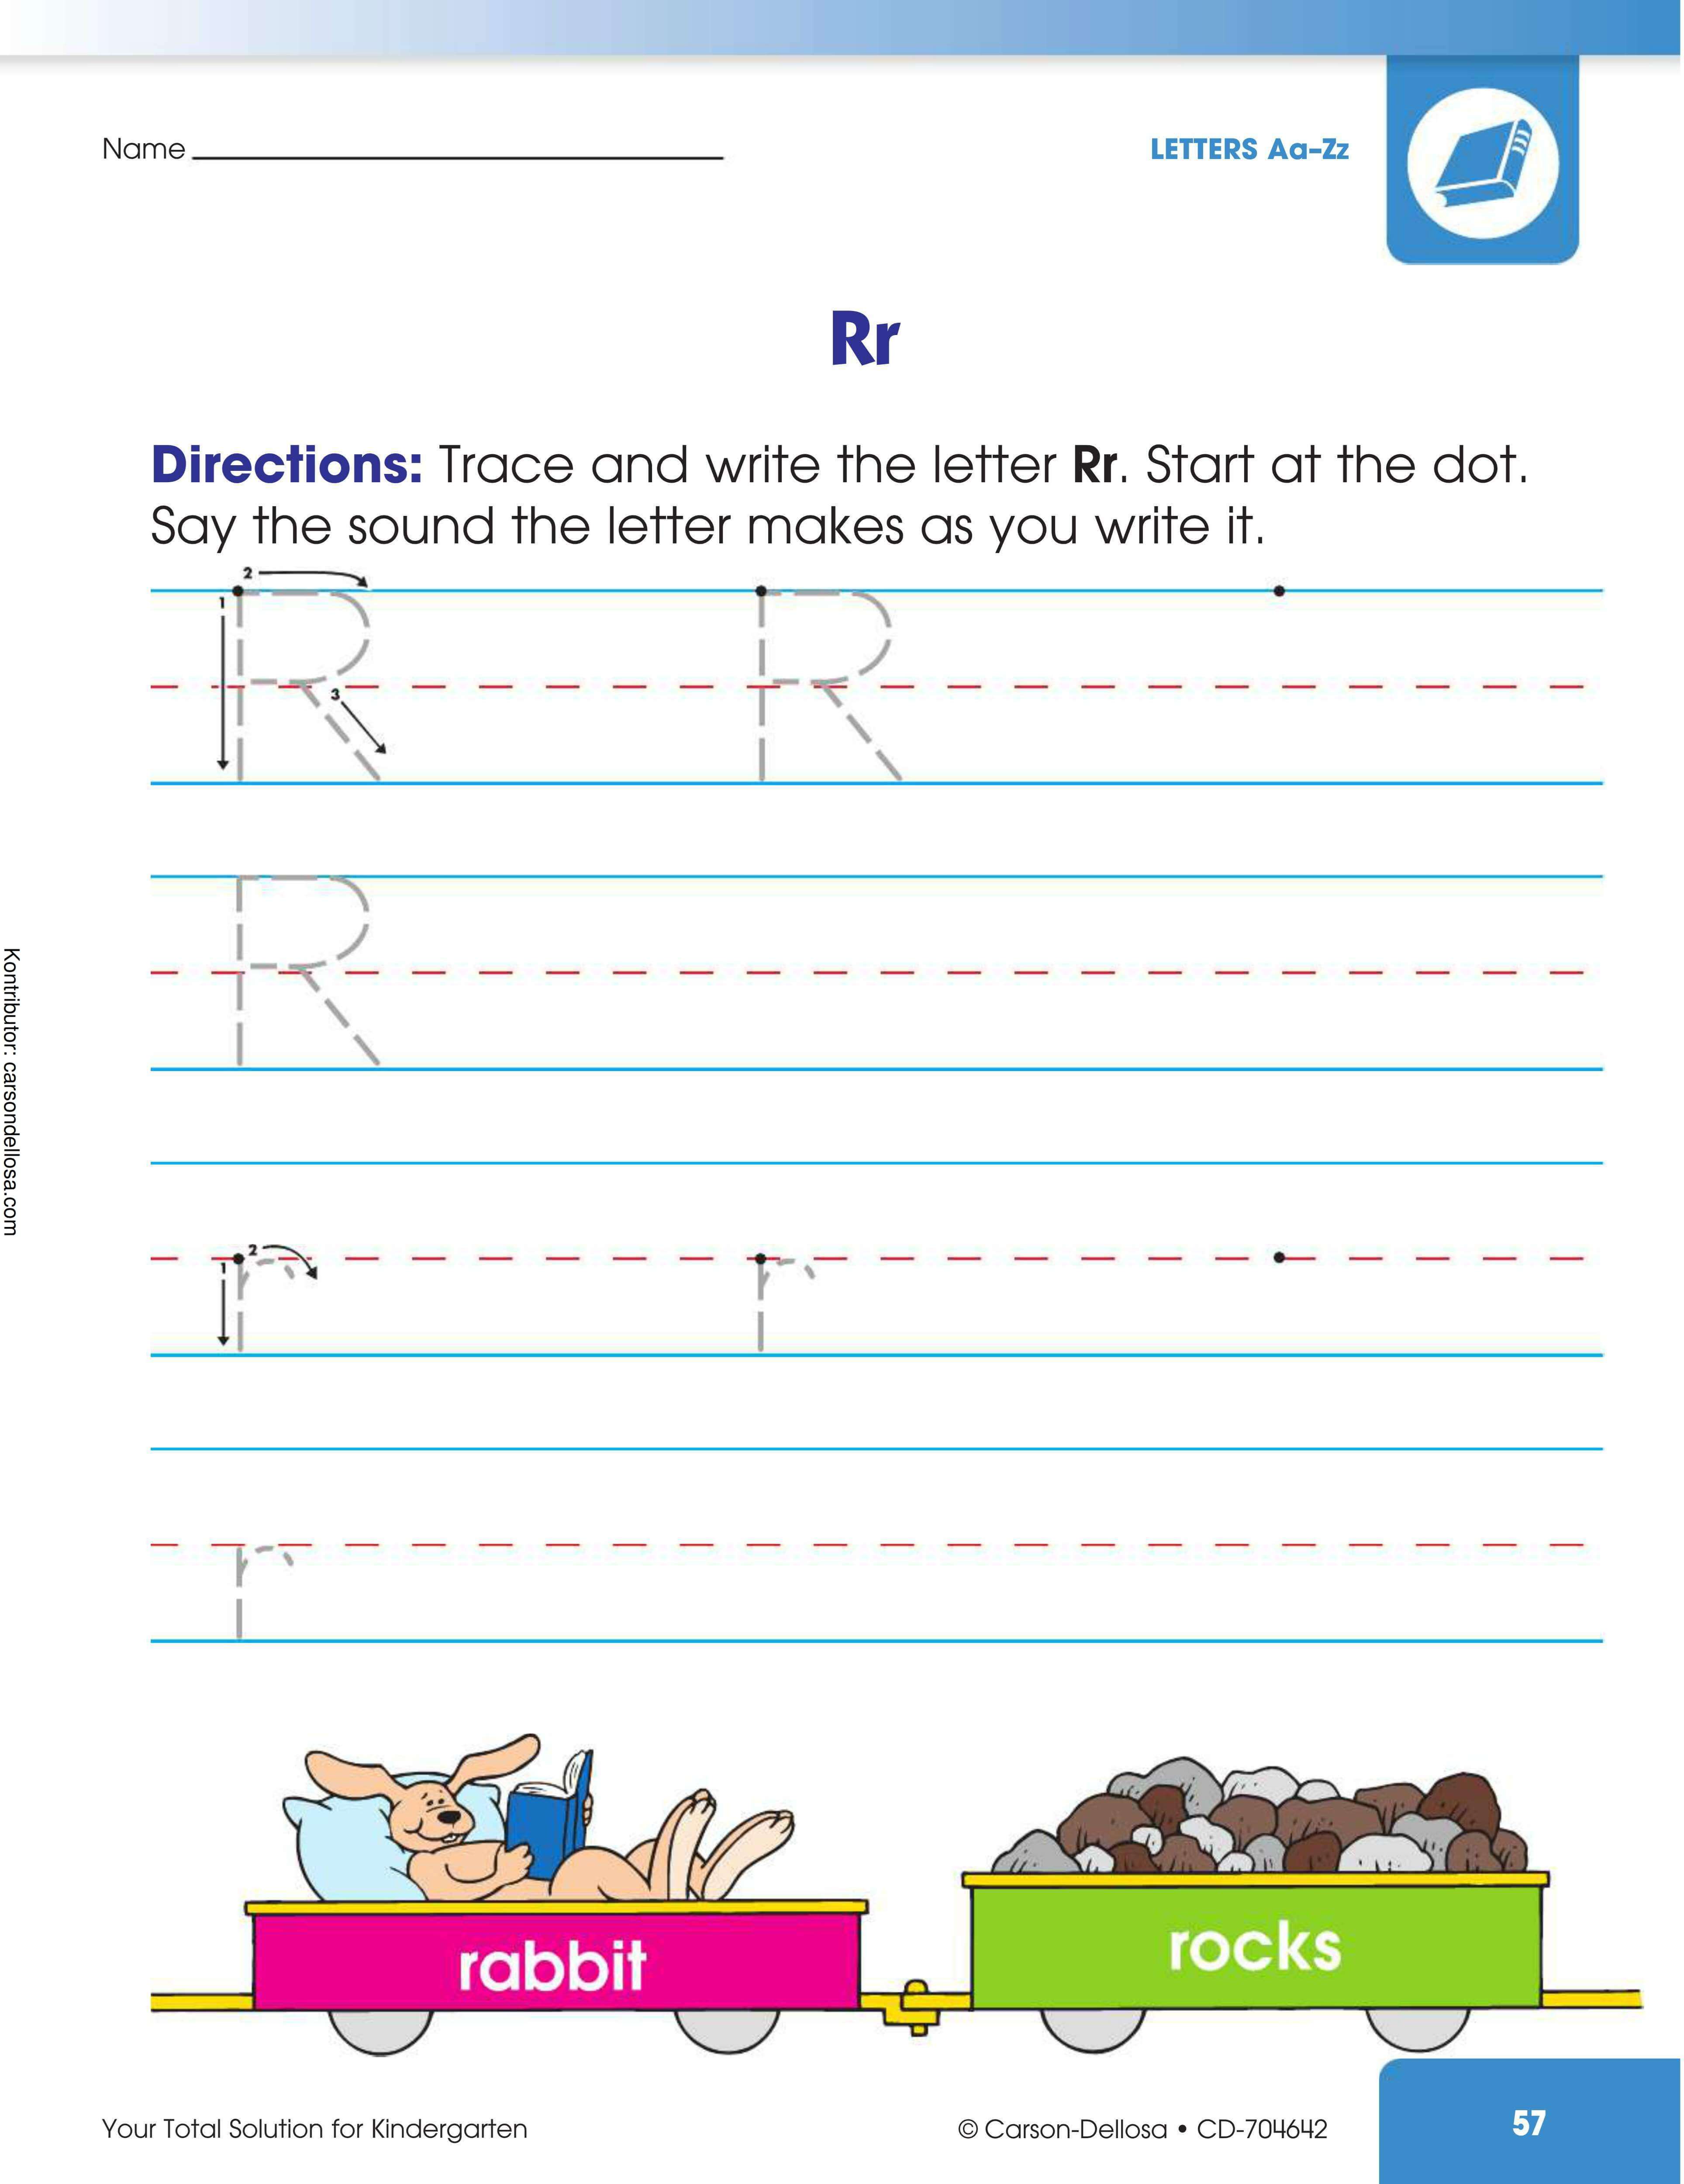 Belajar Mengenal dan Menulis Huruf "R" Besar dan "r" Kecil